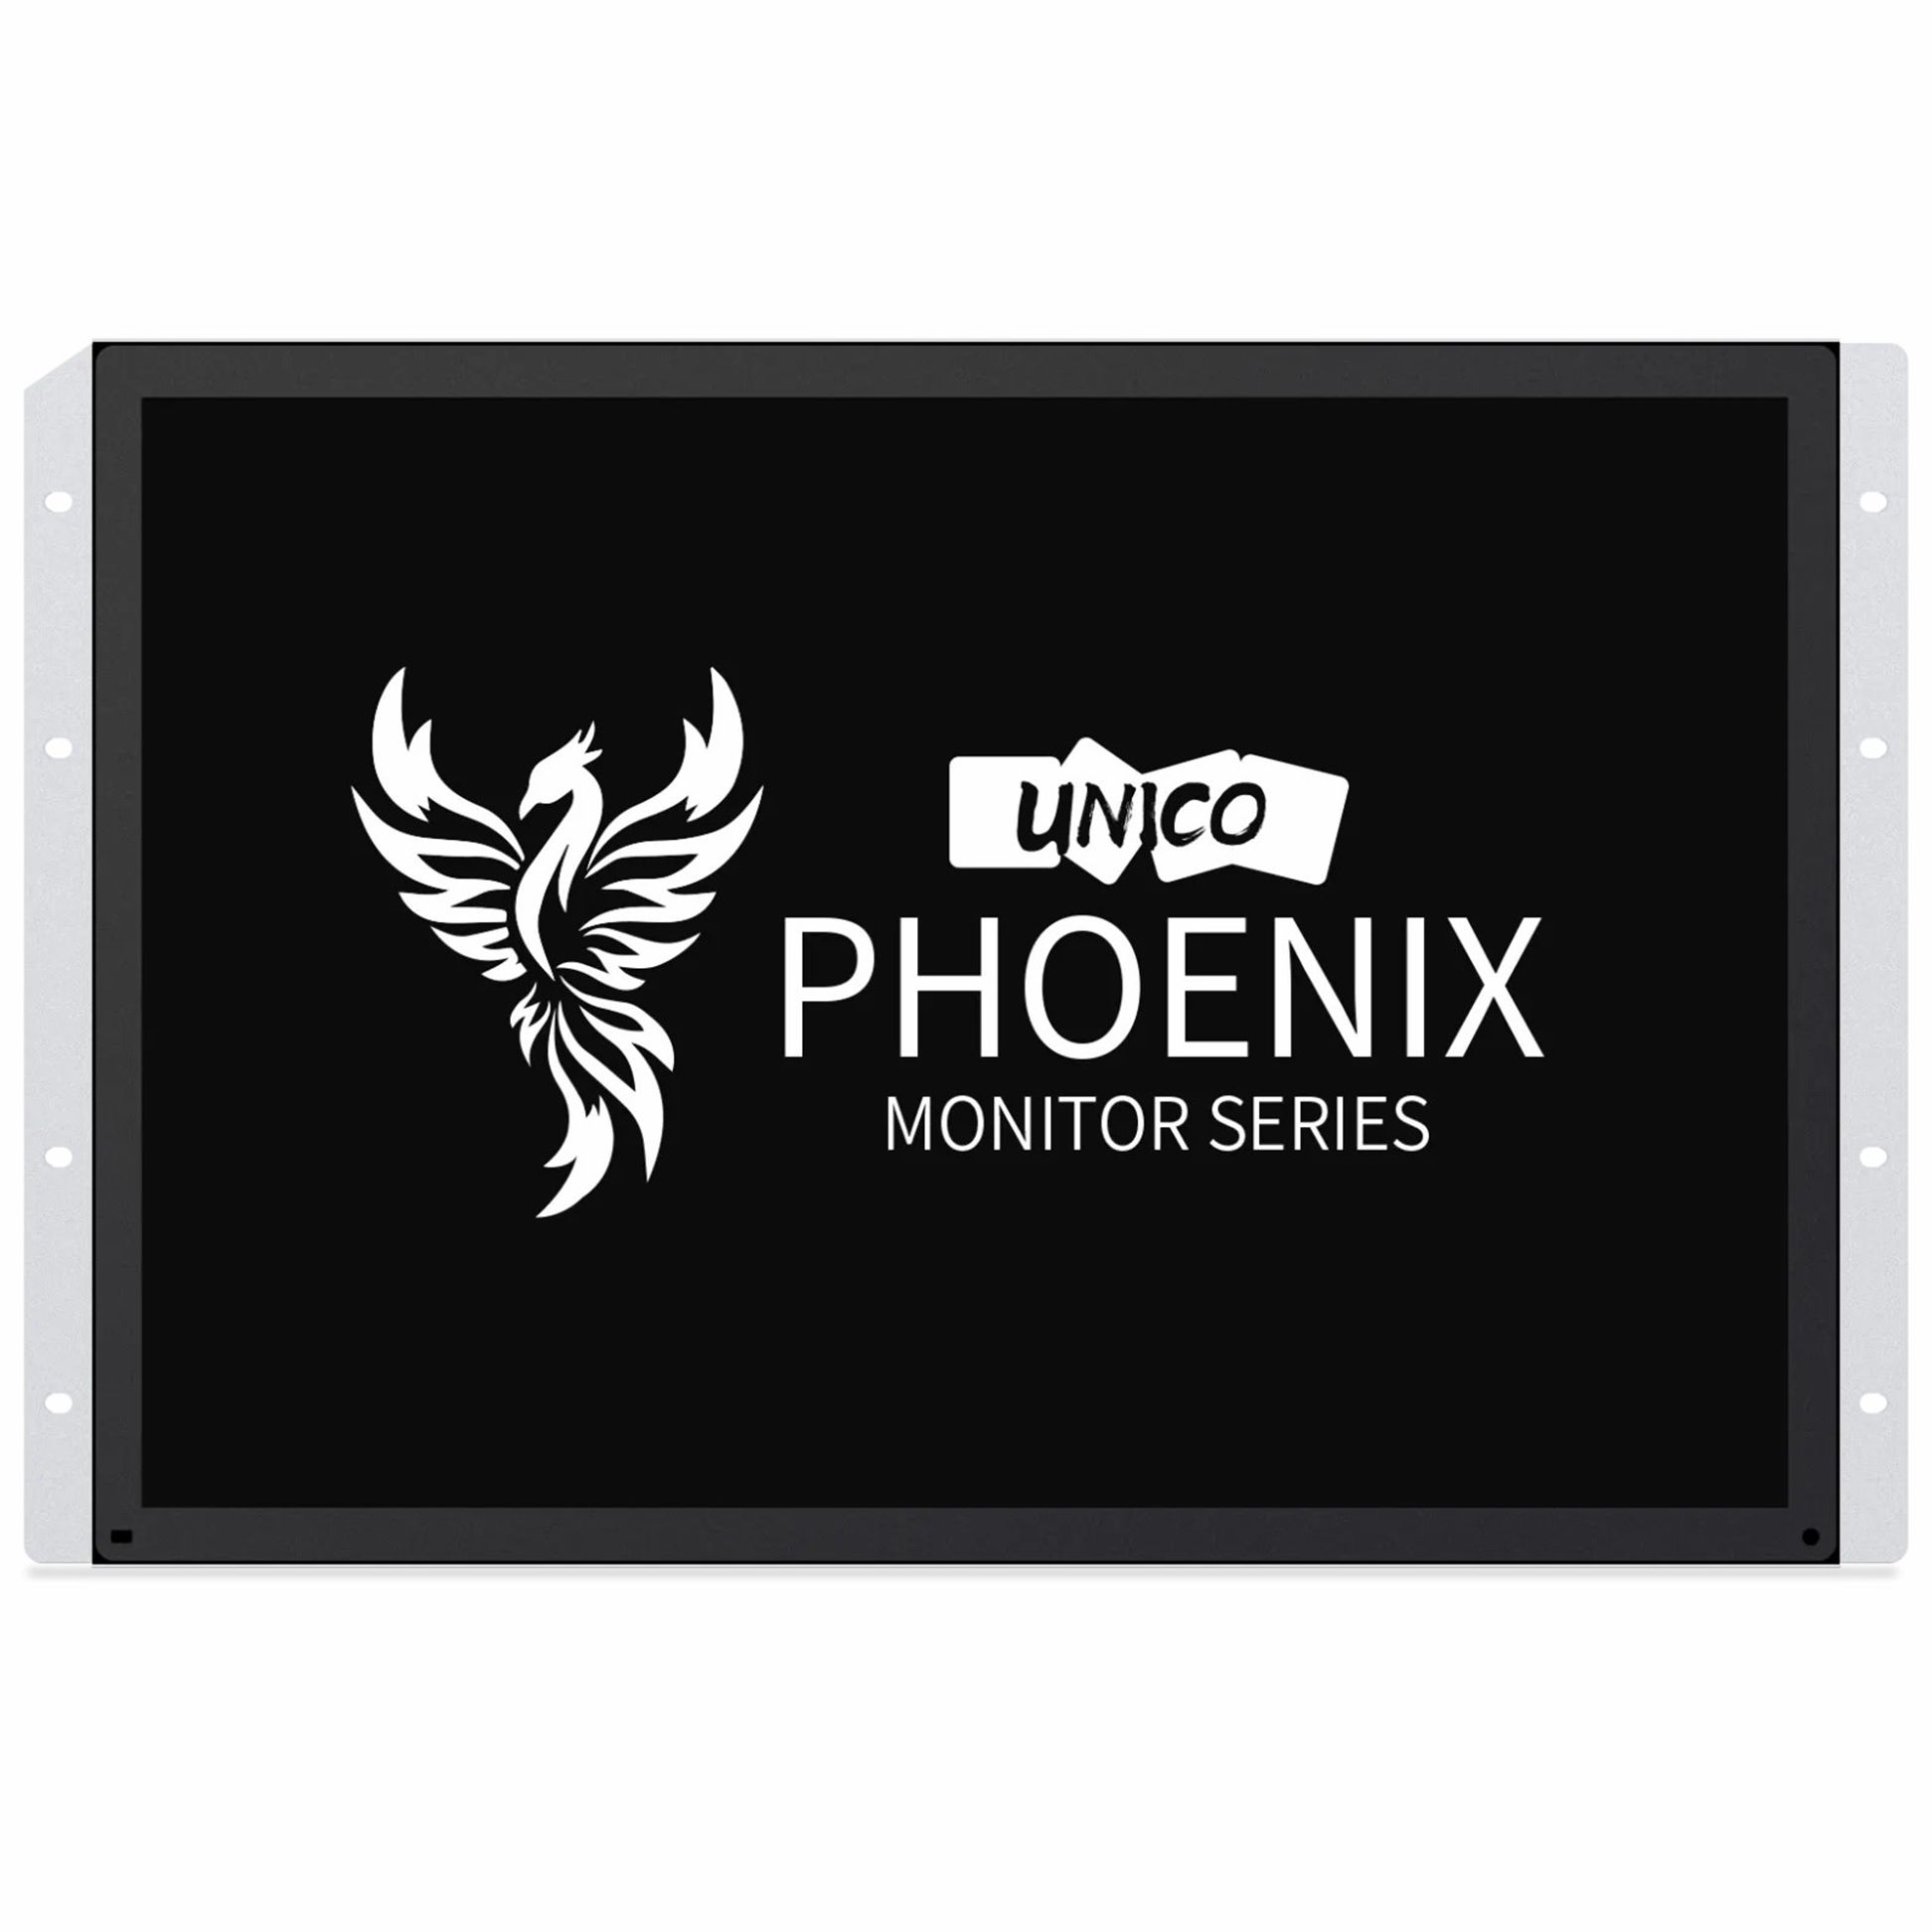 ULM17  17 inch Phoenix  Arcade CRT Replacement LCD Monitors